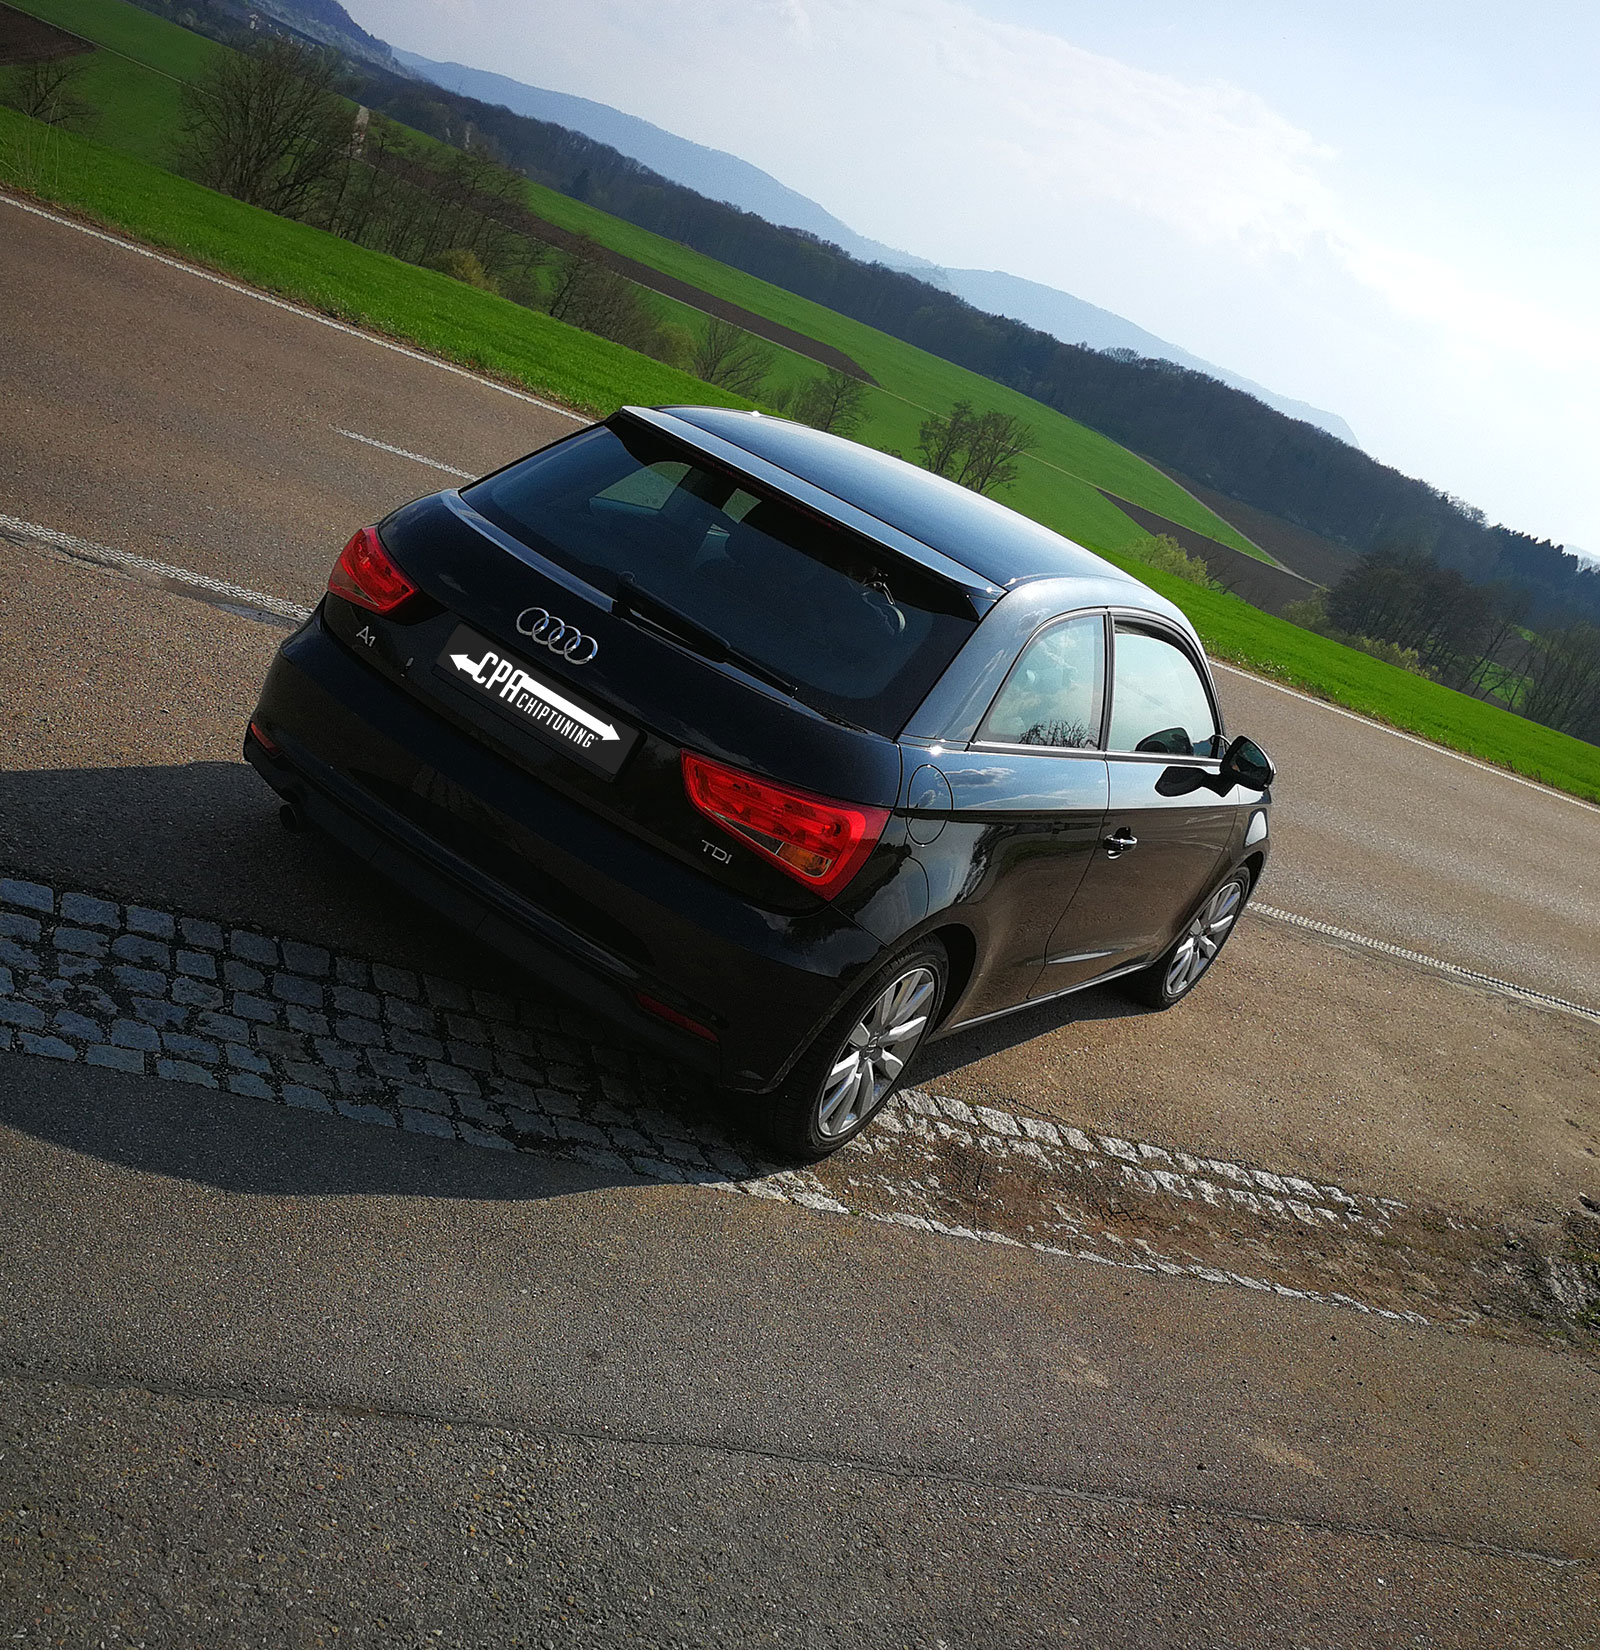 Testes de rodagem: Audi A1 1.4 TDI com CPA Connective System